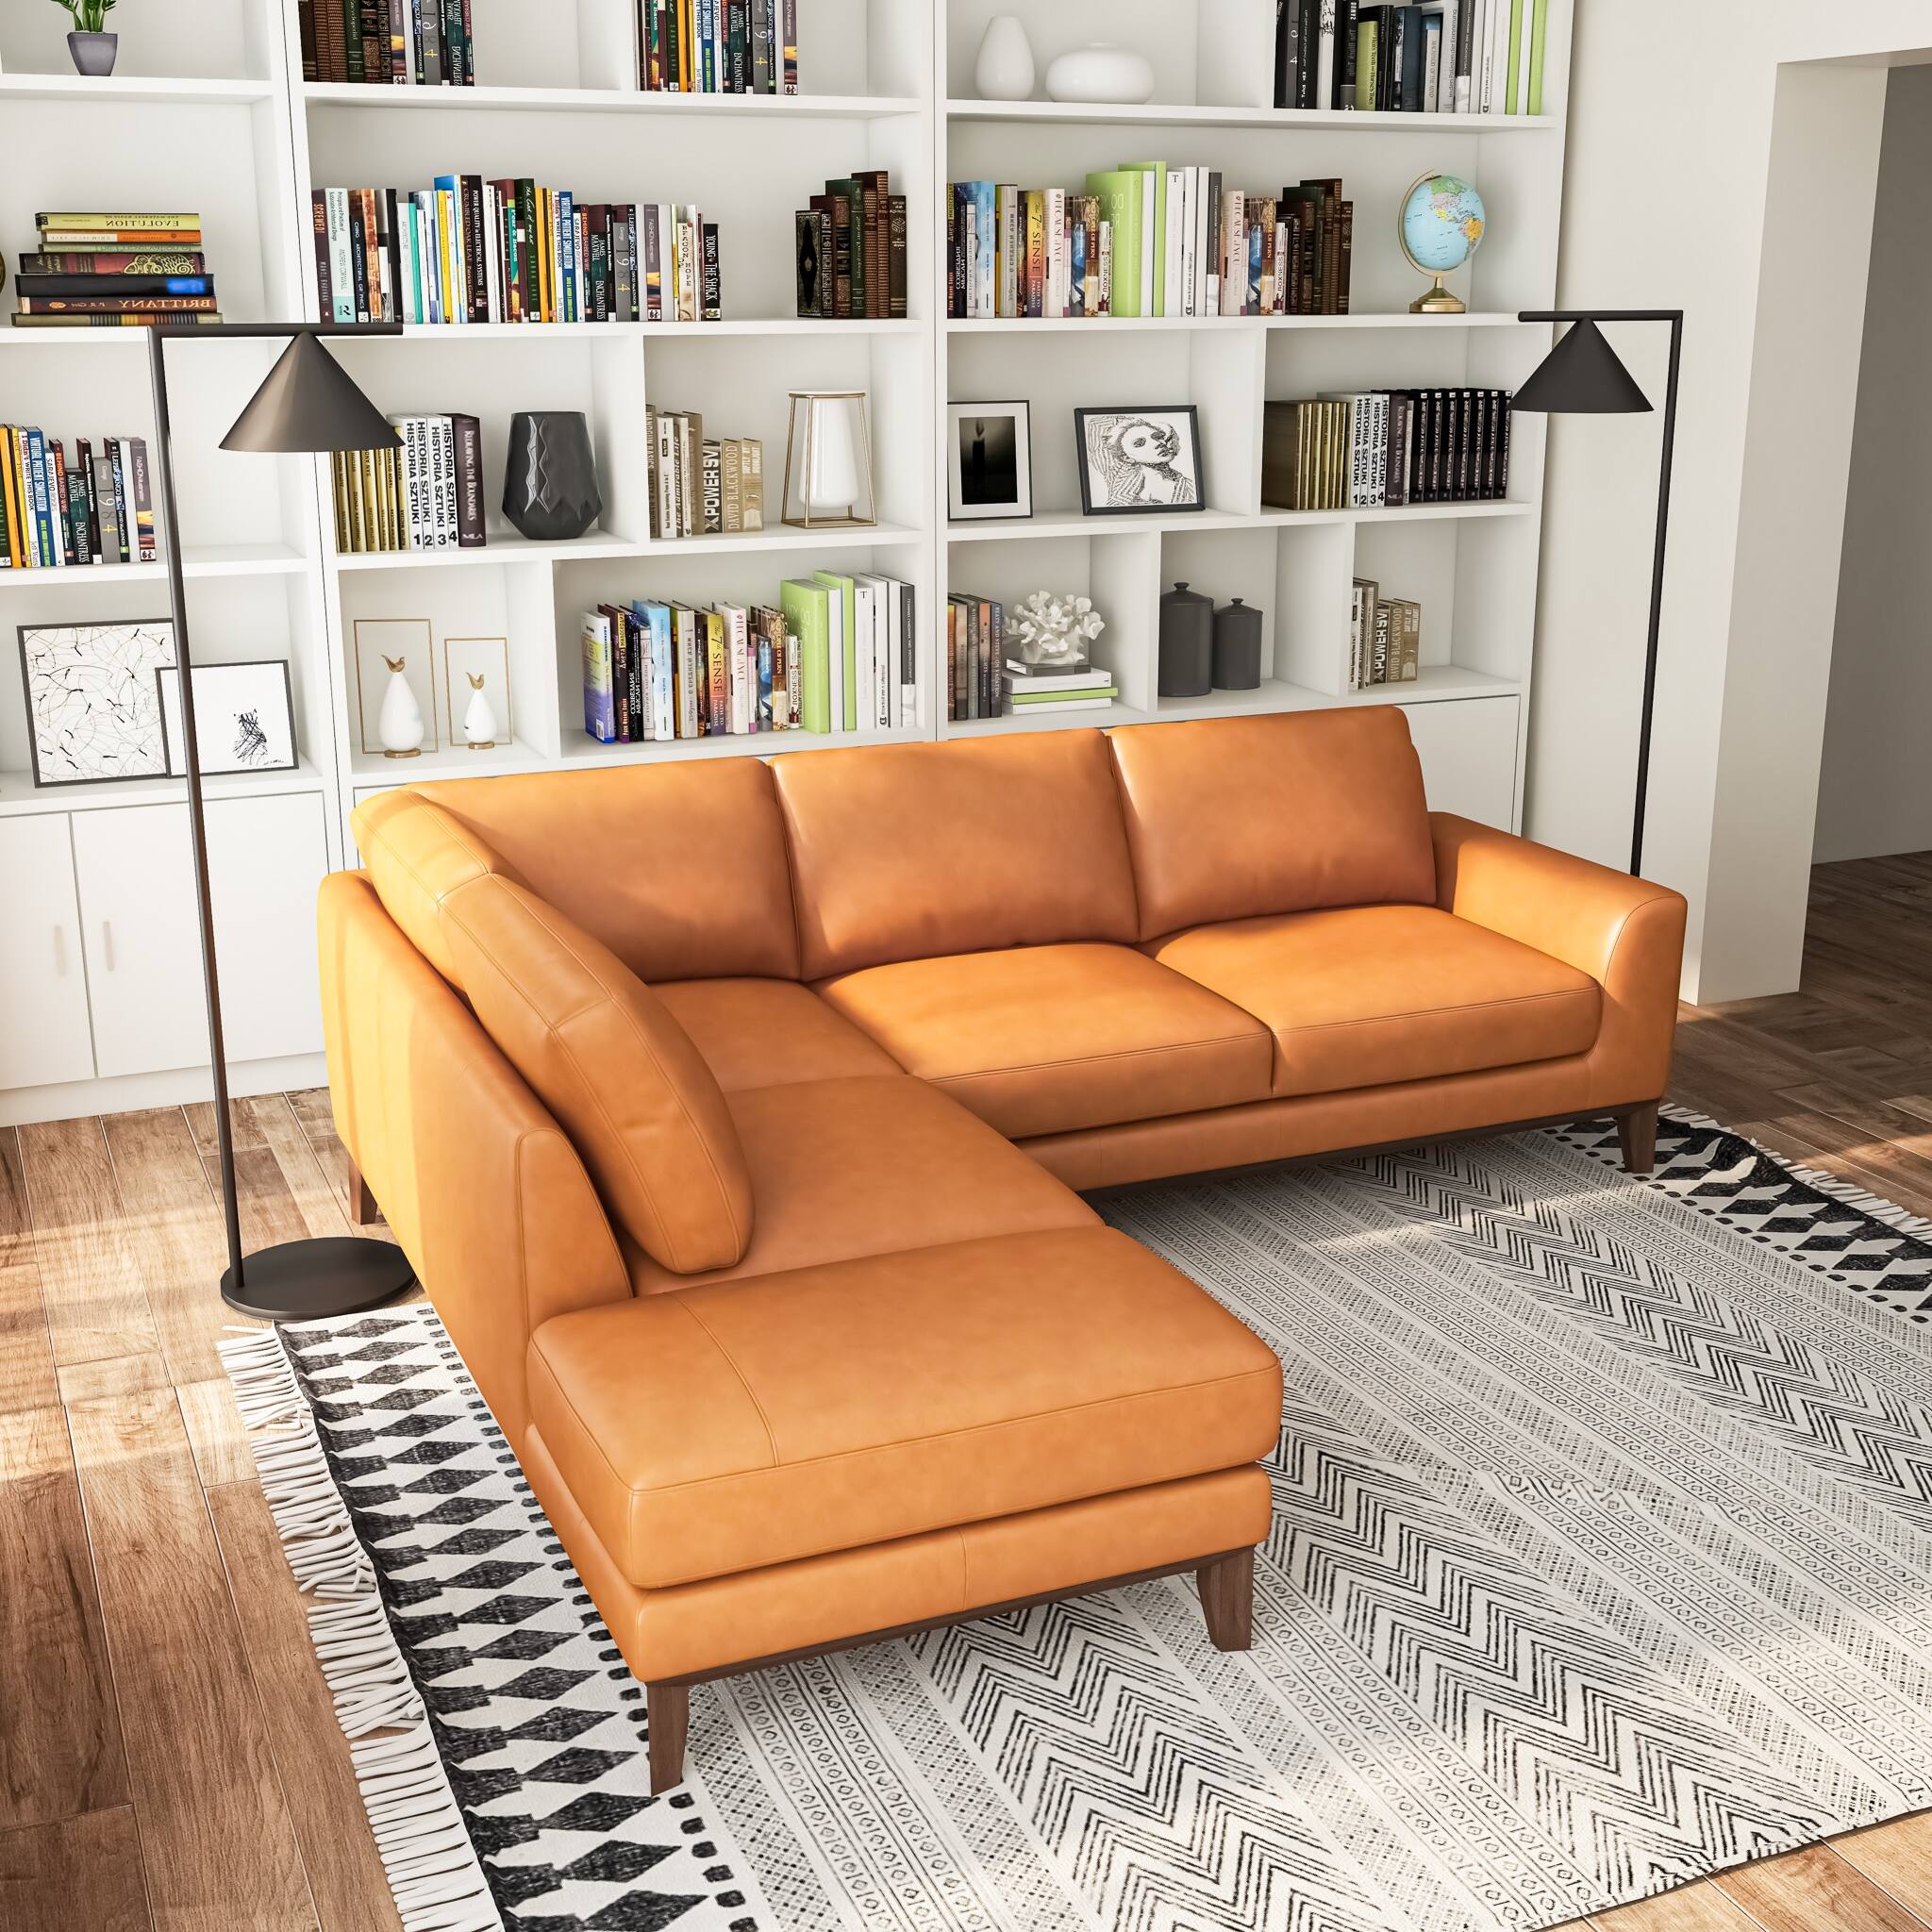 Miamo Mid Century Living Room Top Leather Corner Sectional Sofa in Tan